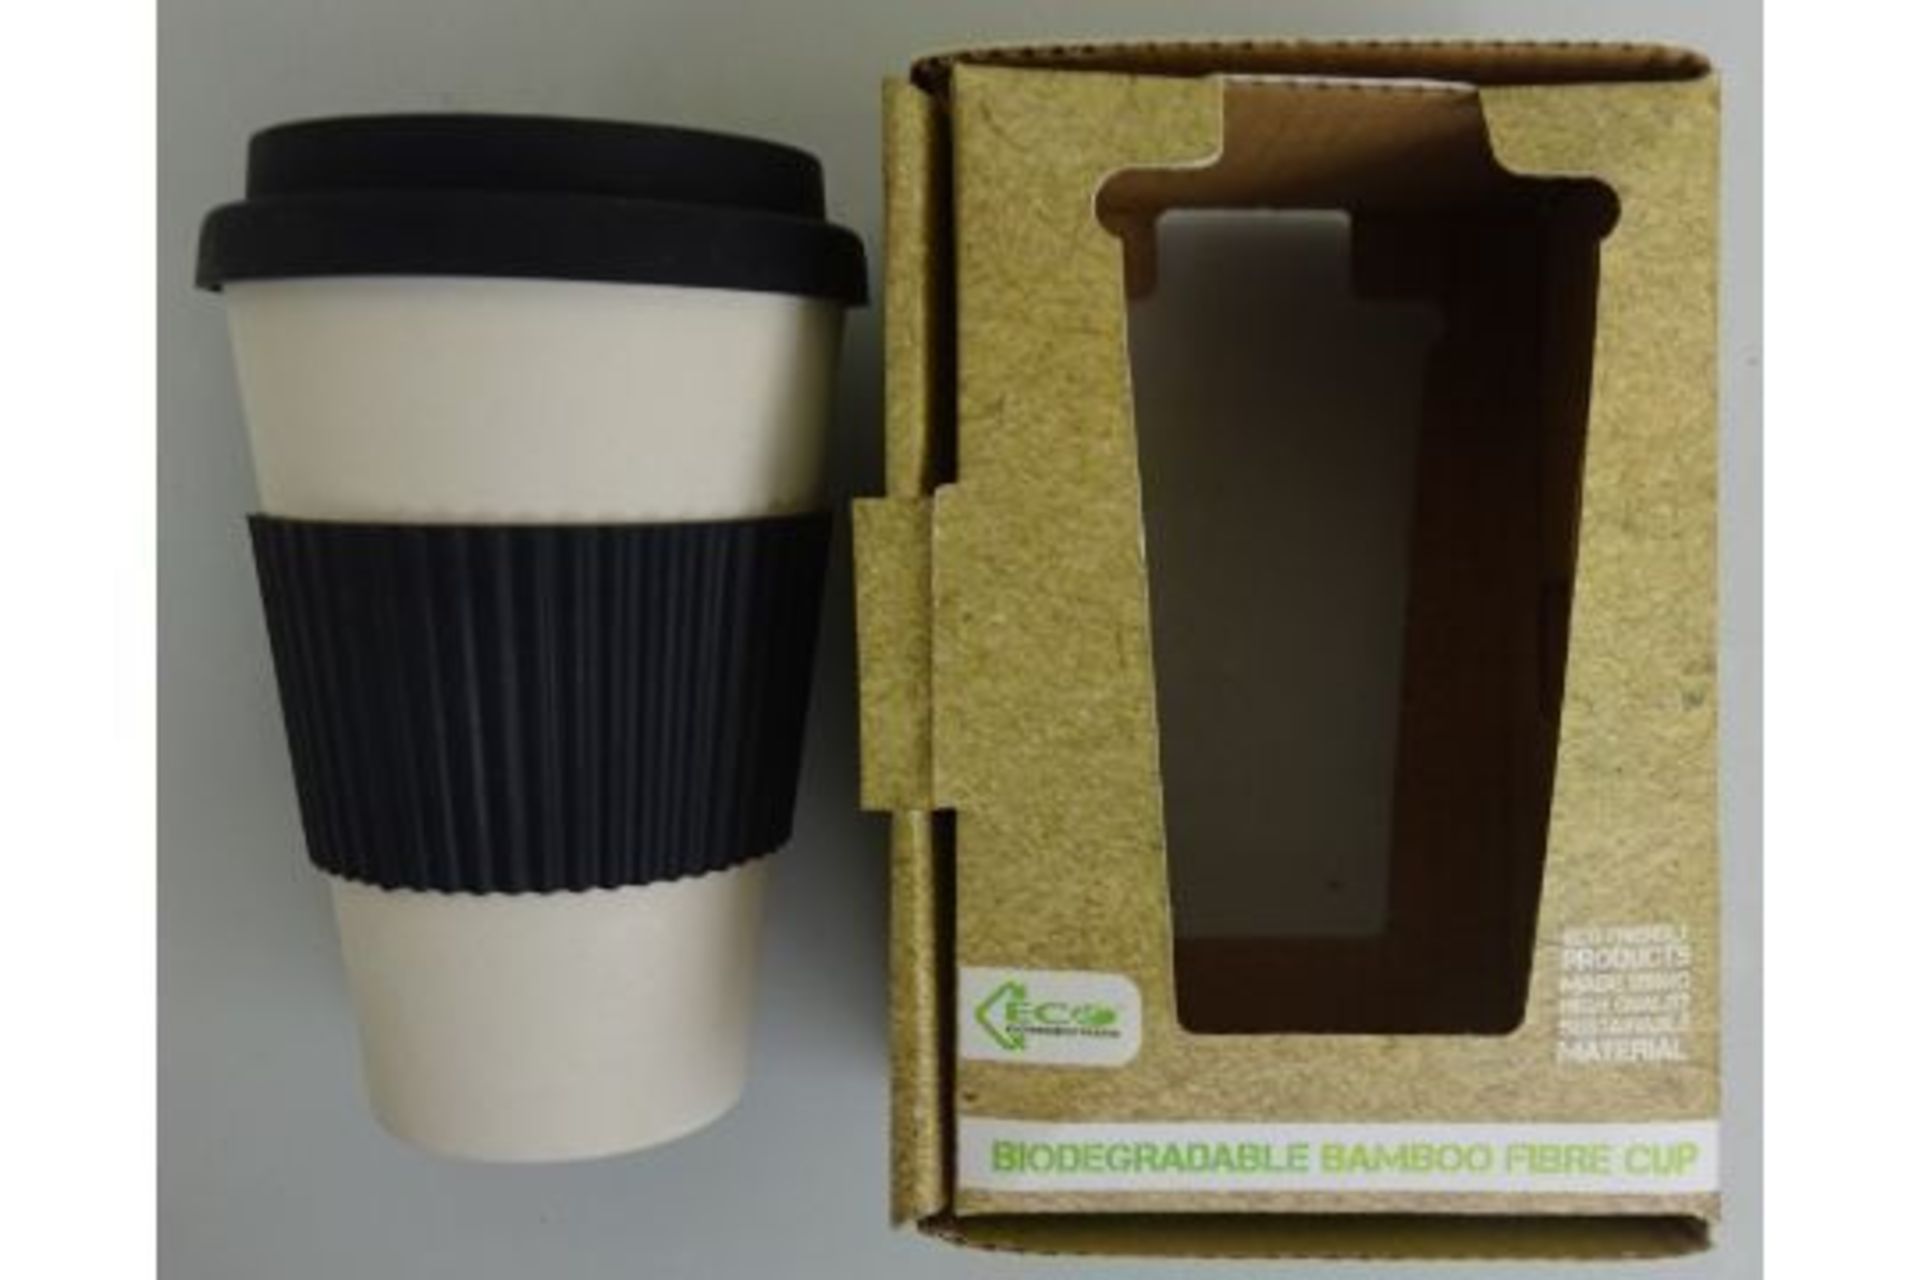 Black Biodegradable Bamboo Fibre Cup